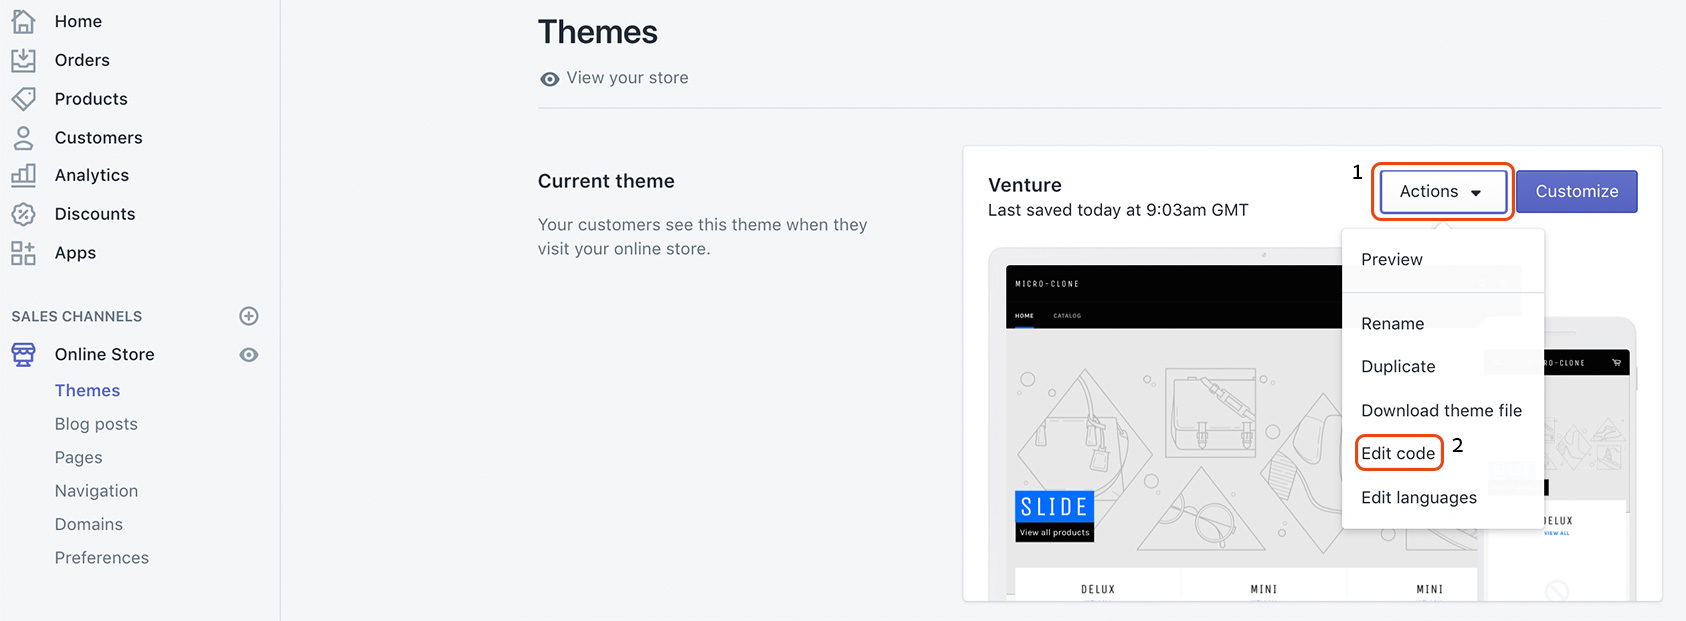 Online store screenshot at Shopify platform